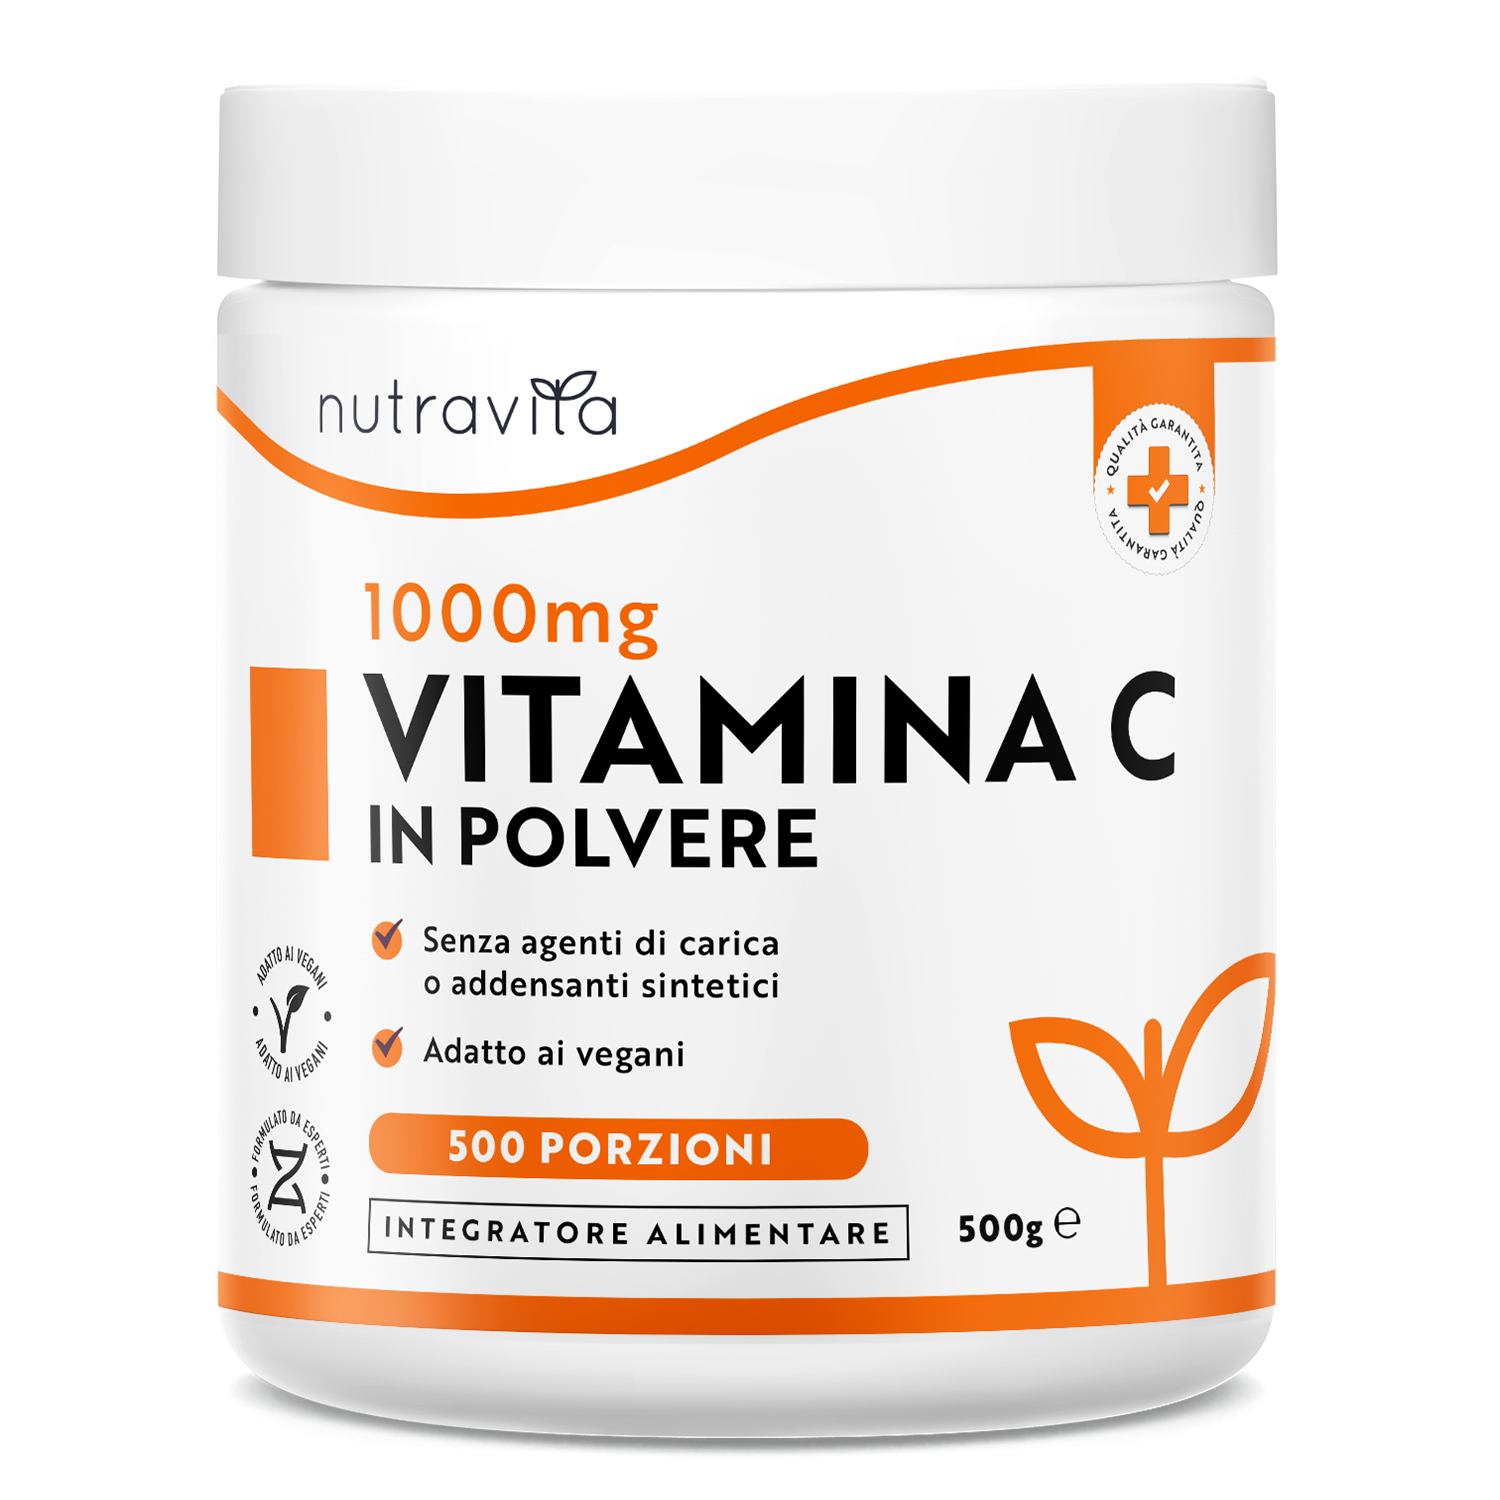 Vitamina C in Polvere 500 g - 1000 mg di Vitamina C Per Porzione